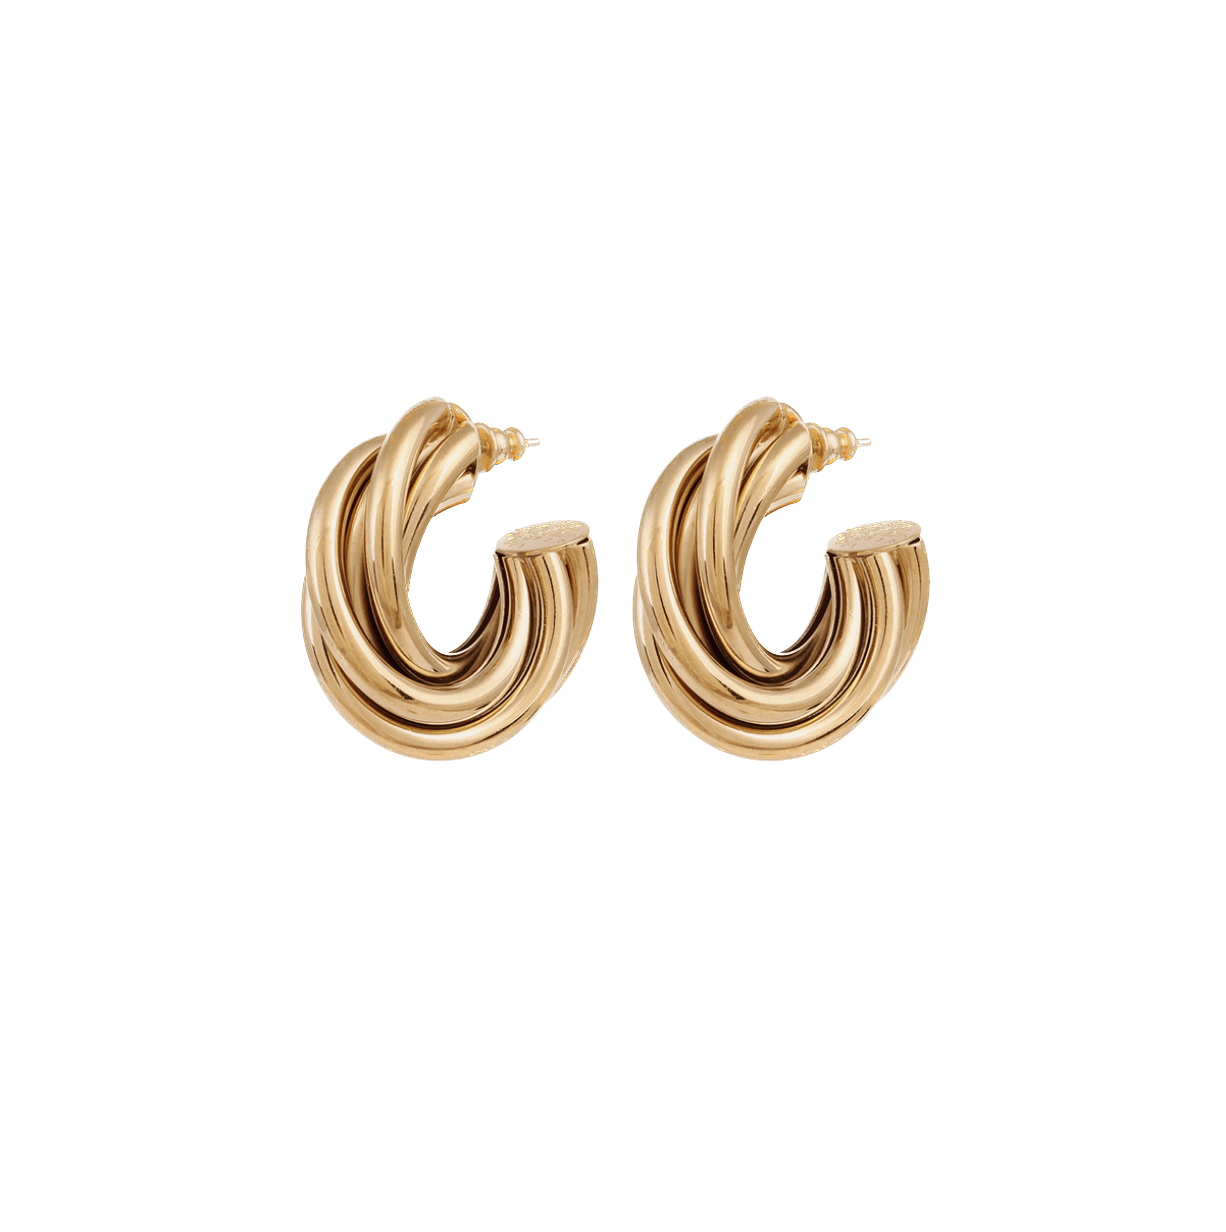 Gas Earrings Yellow Gold / Medium Gas Atik Gold Hoop Earrings